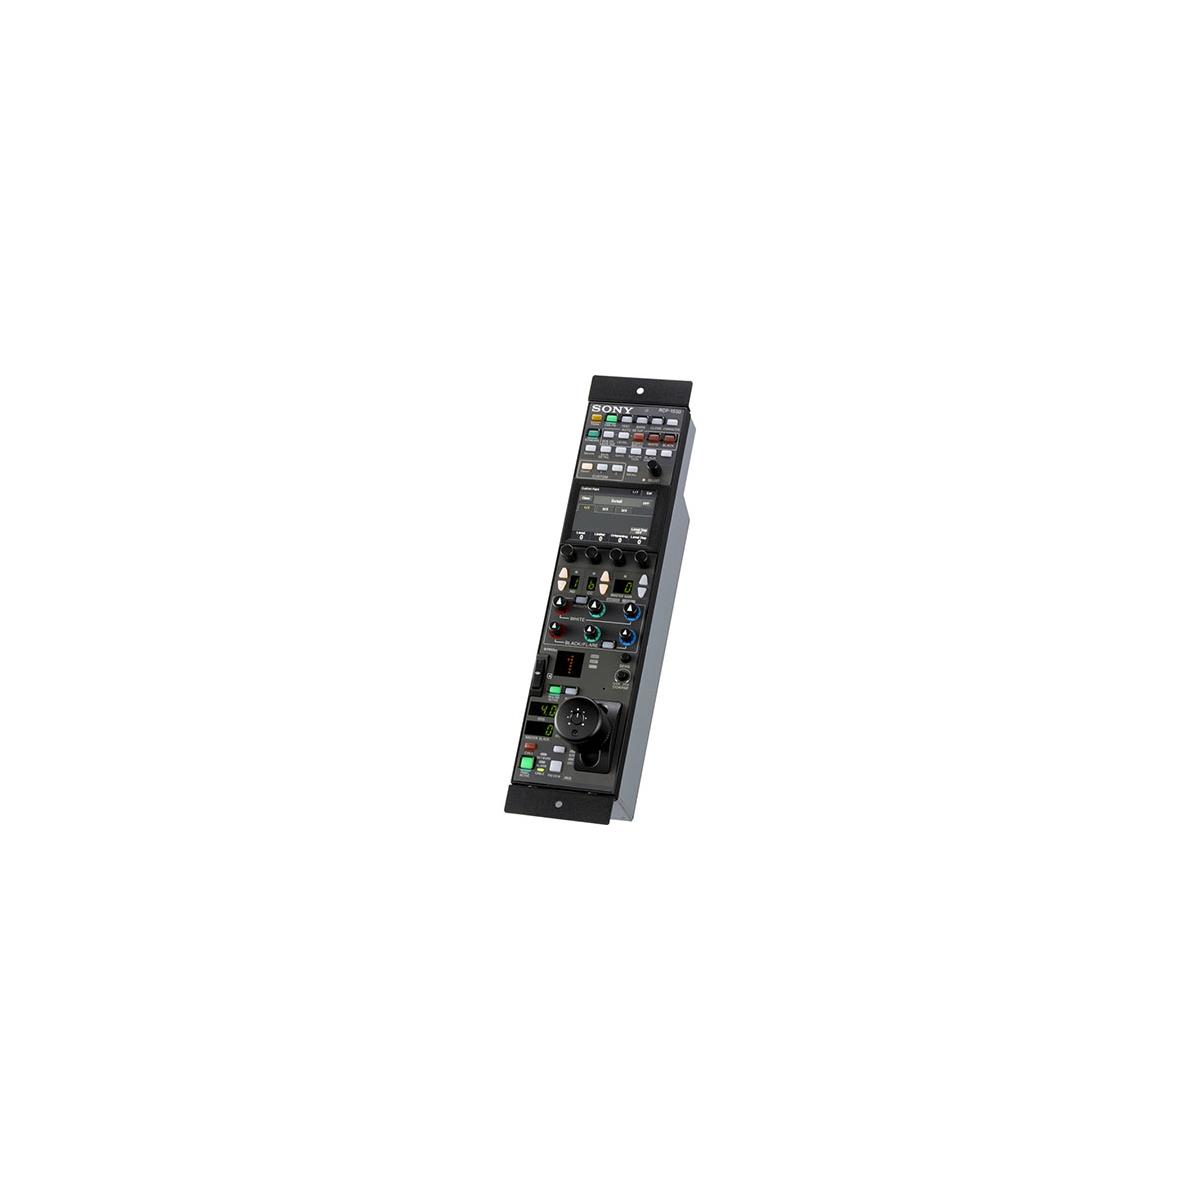 Image of Sony RCP-1530 Slim Joystick Remote Control Panel